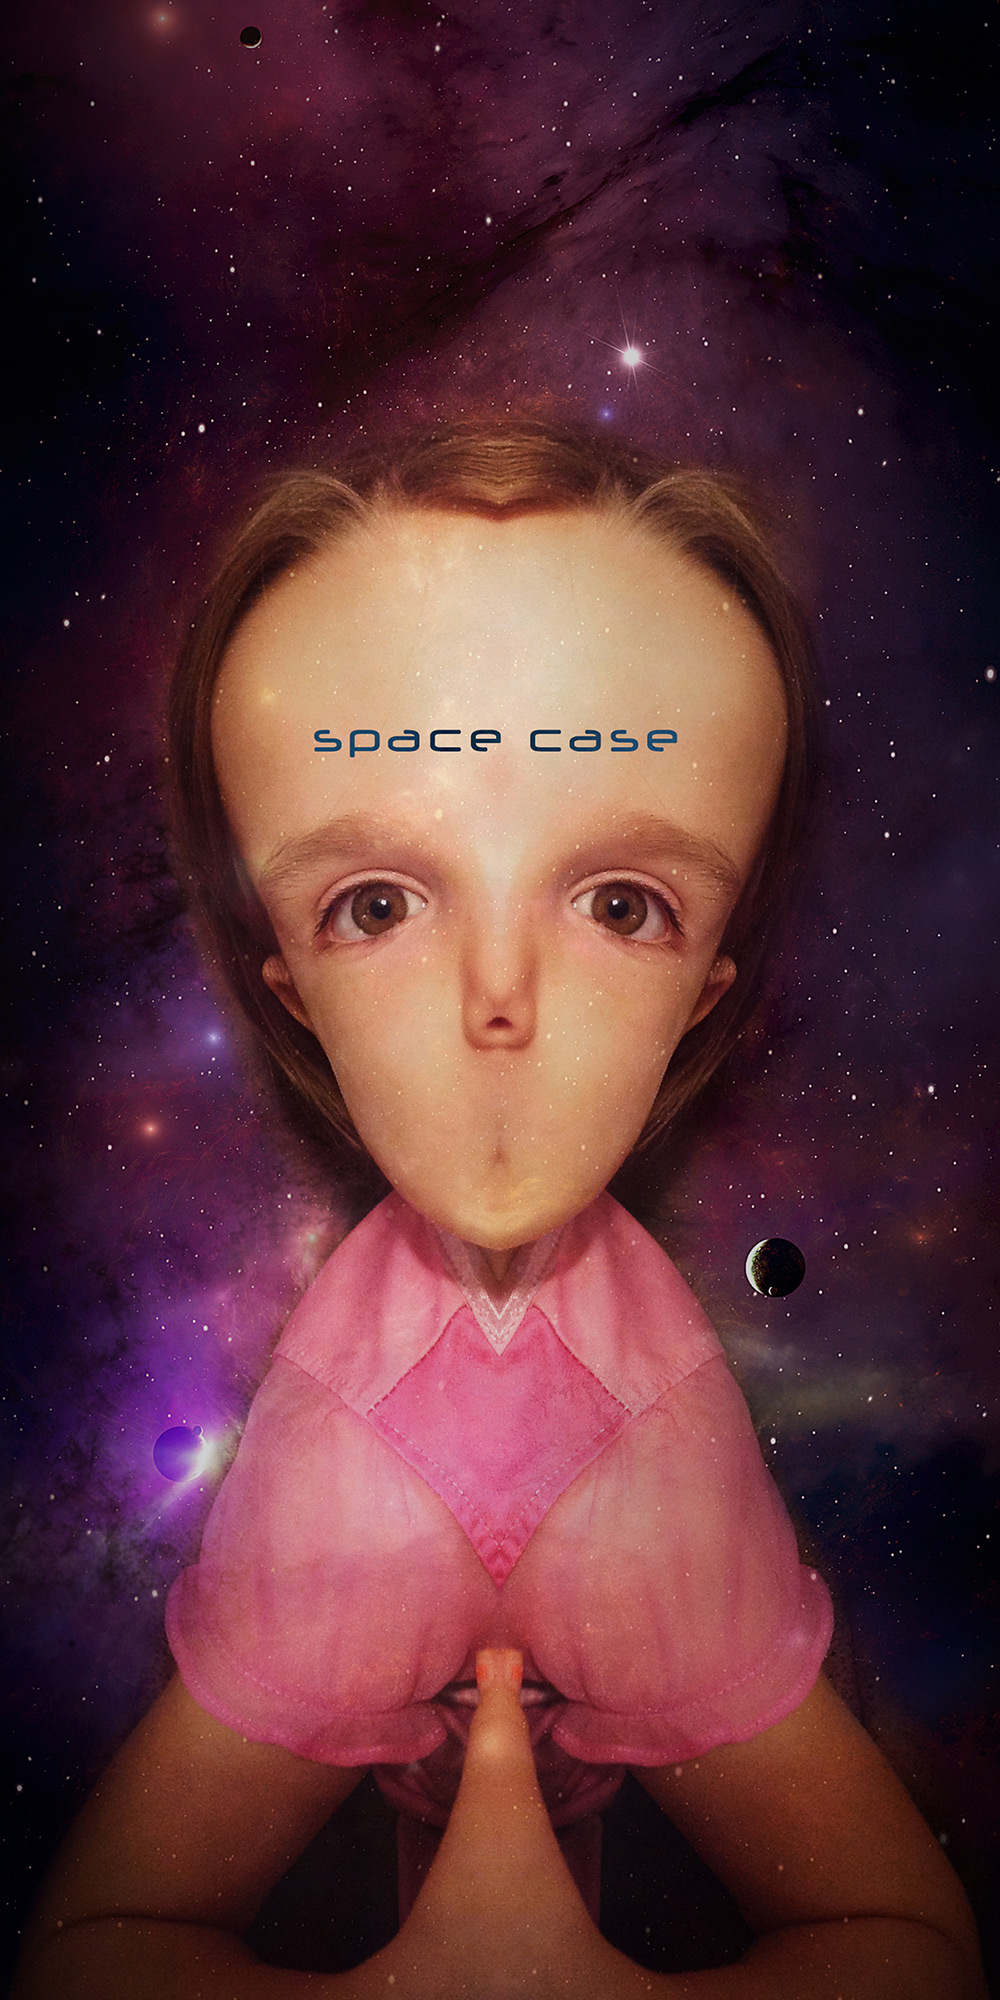 Jeff Kern design for "Space Case"